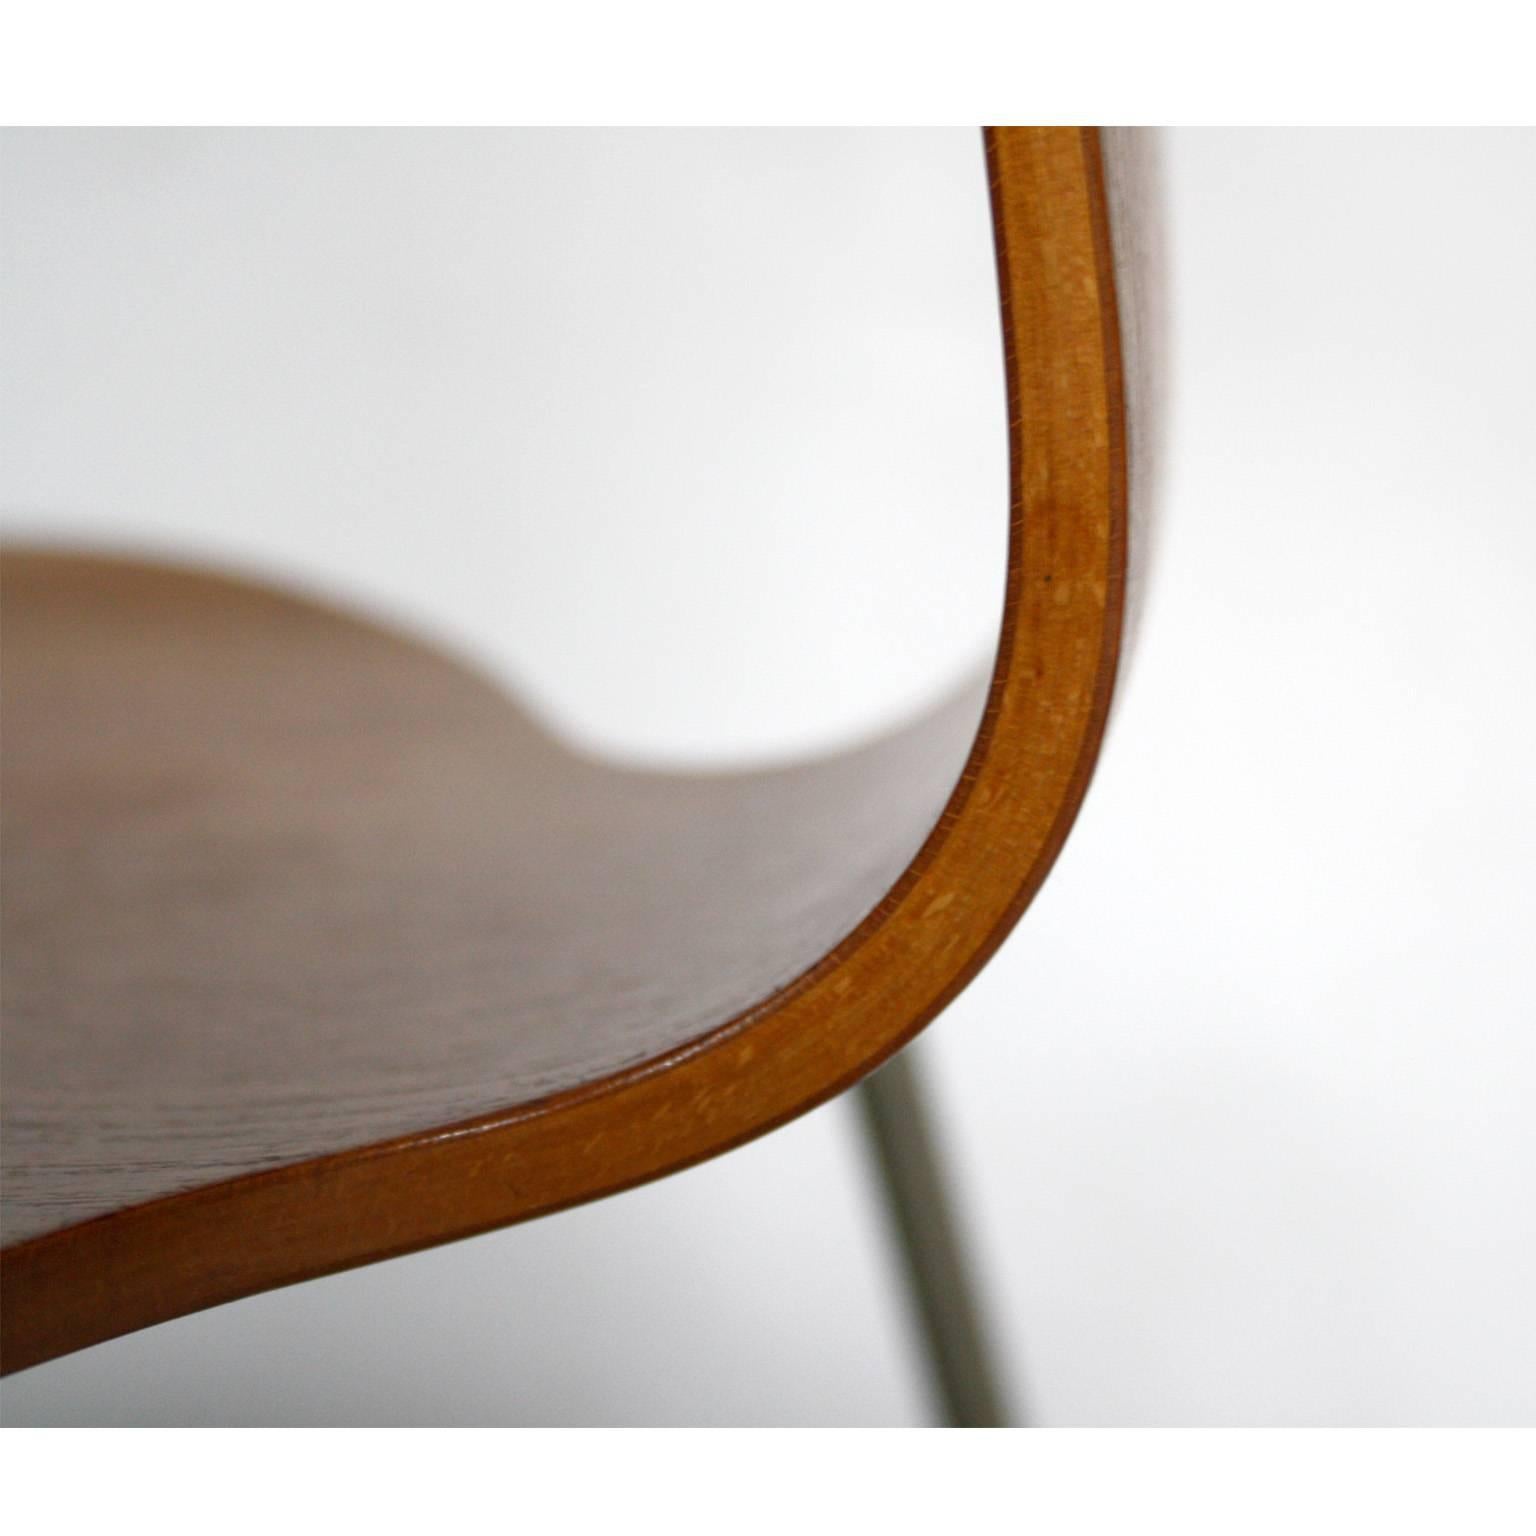 Arne Jacobsen for Fritz Hansen “Mosquito” Dining Chair For Sale 3